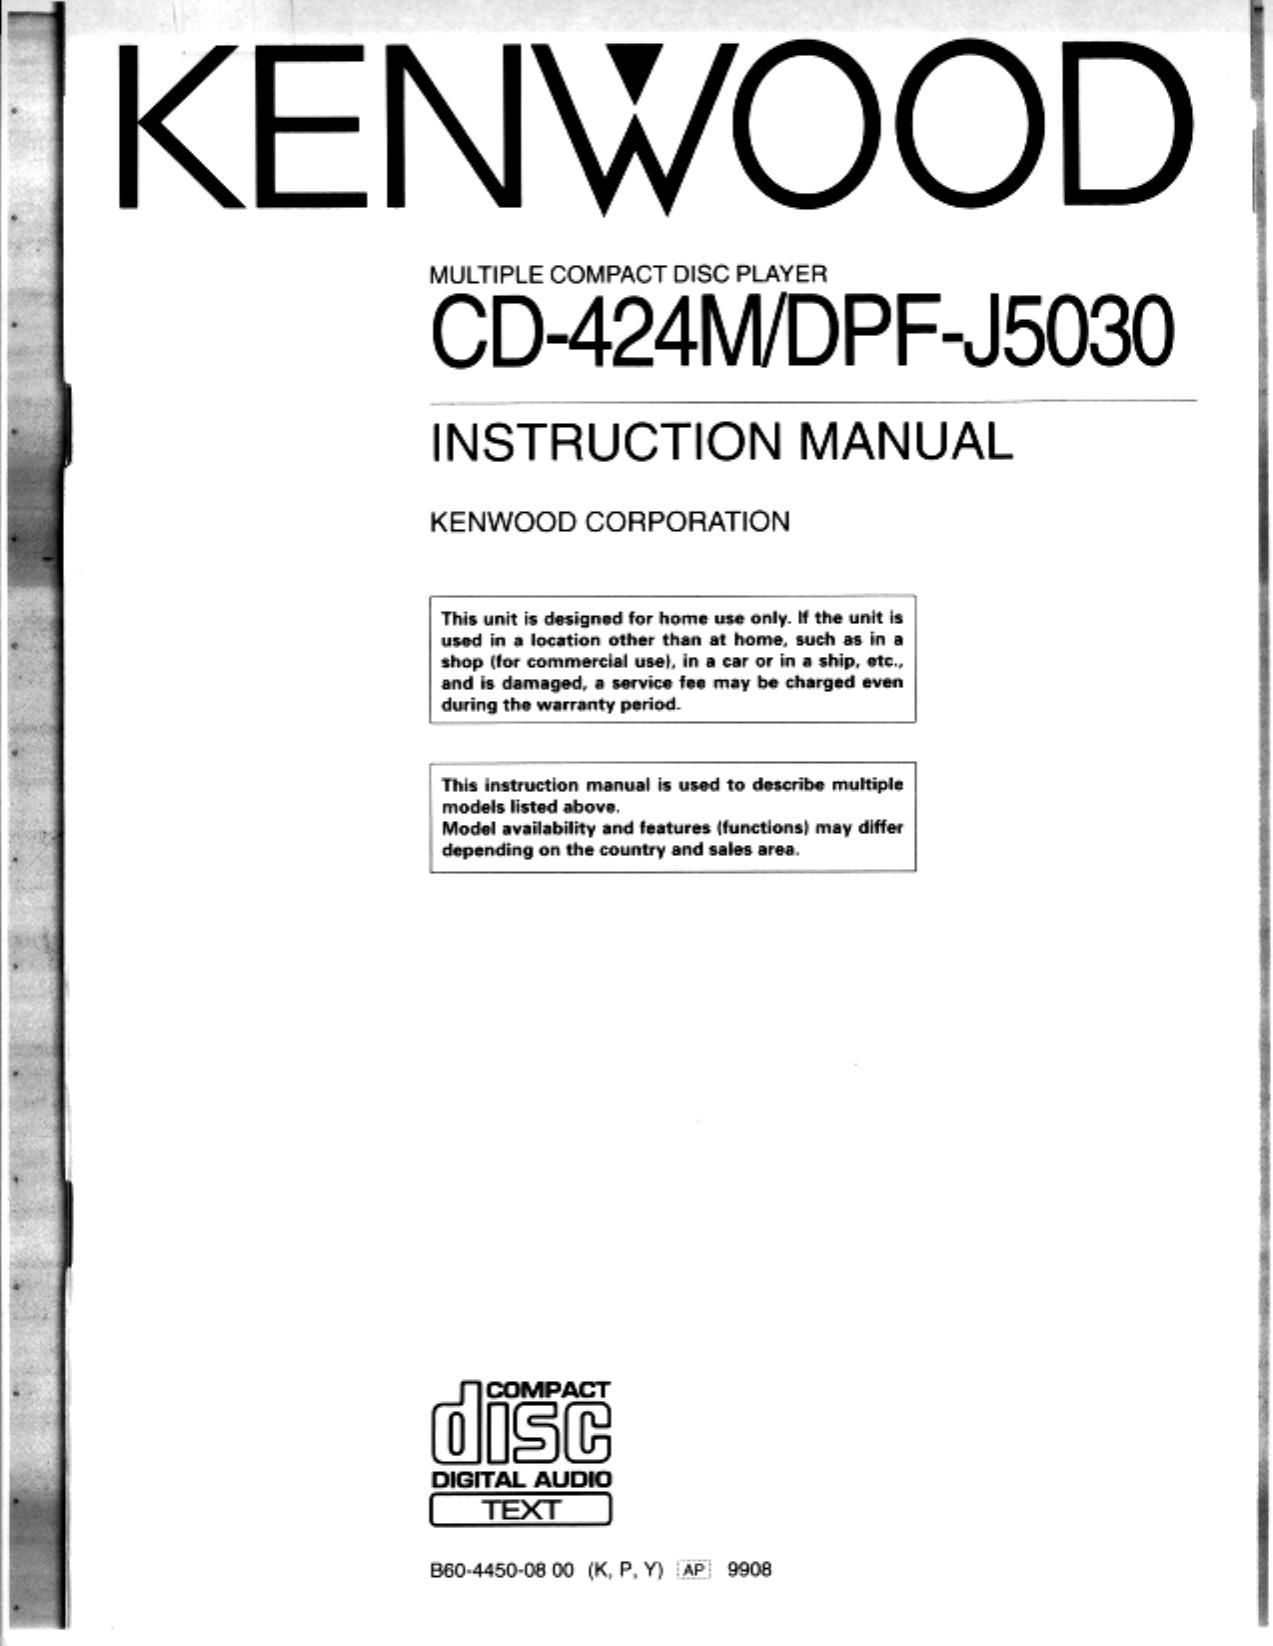 Kenwood DPFJ 5030 Owners Manual